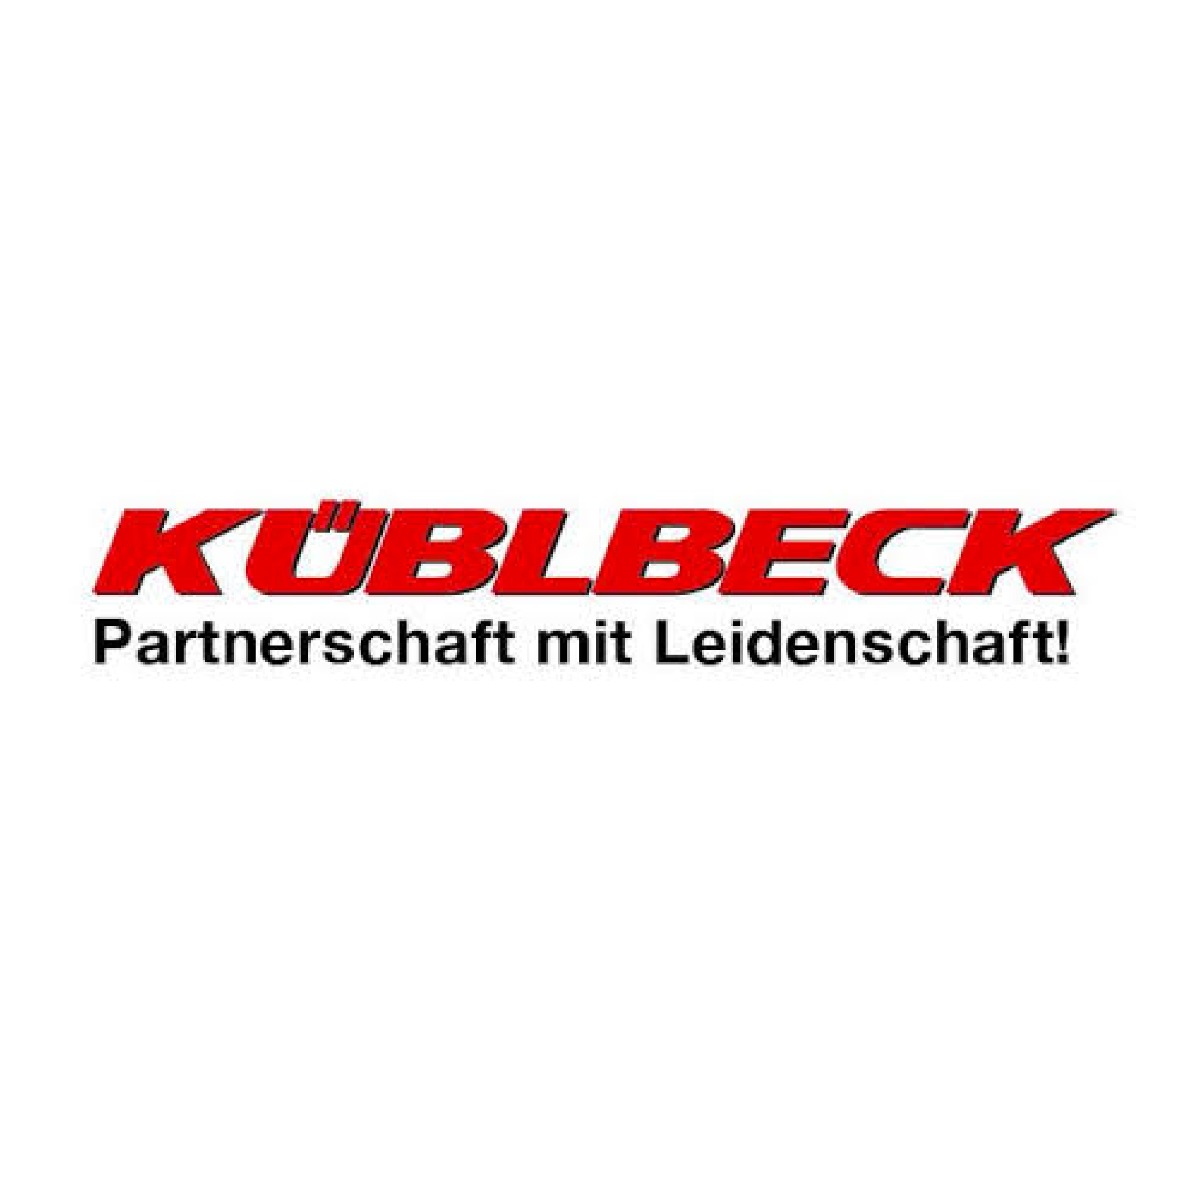 Küblbeck GmbH & Co. KG